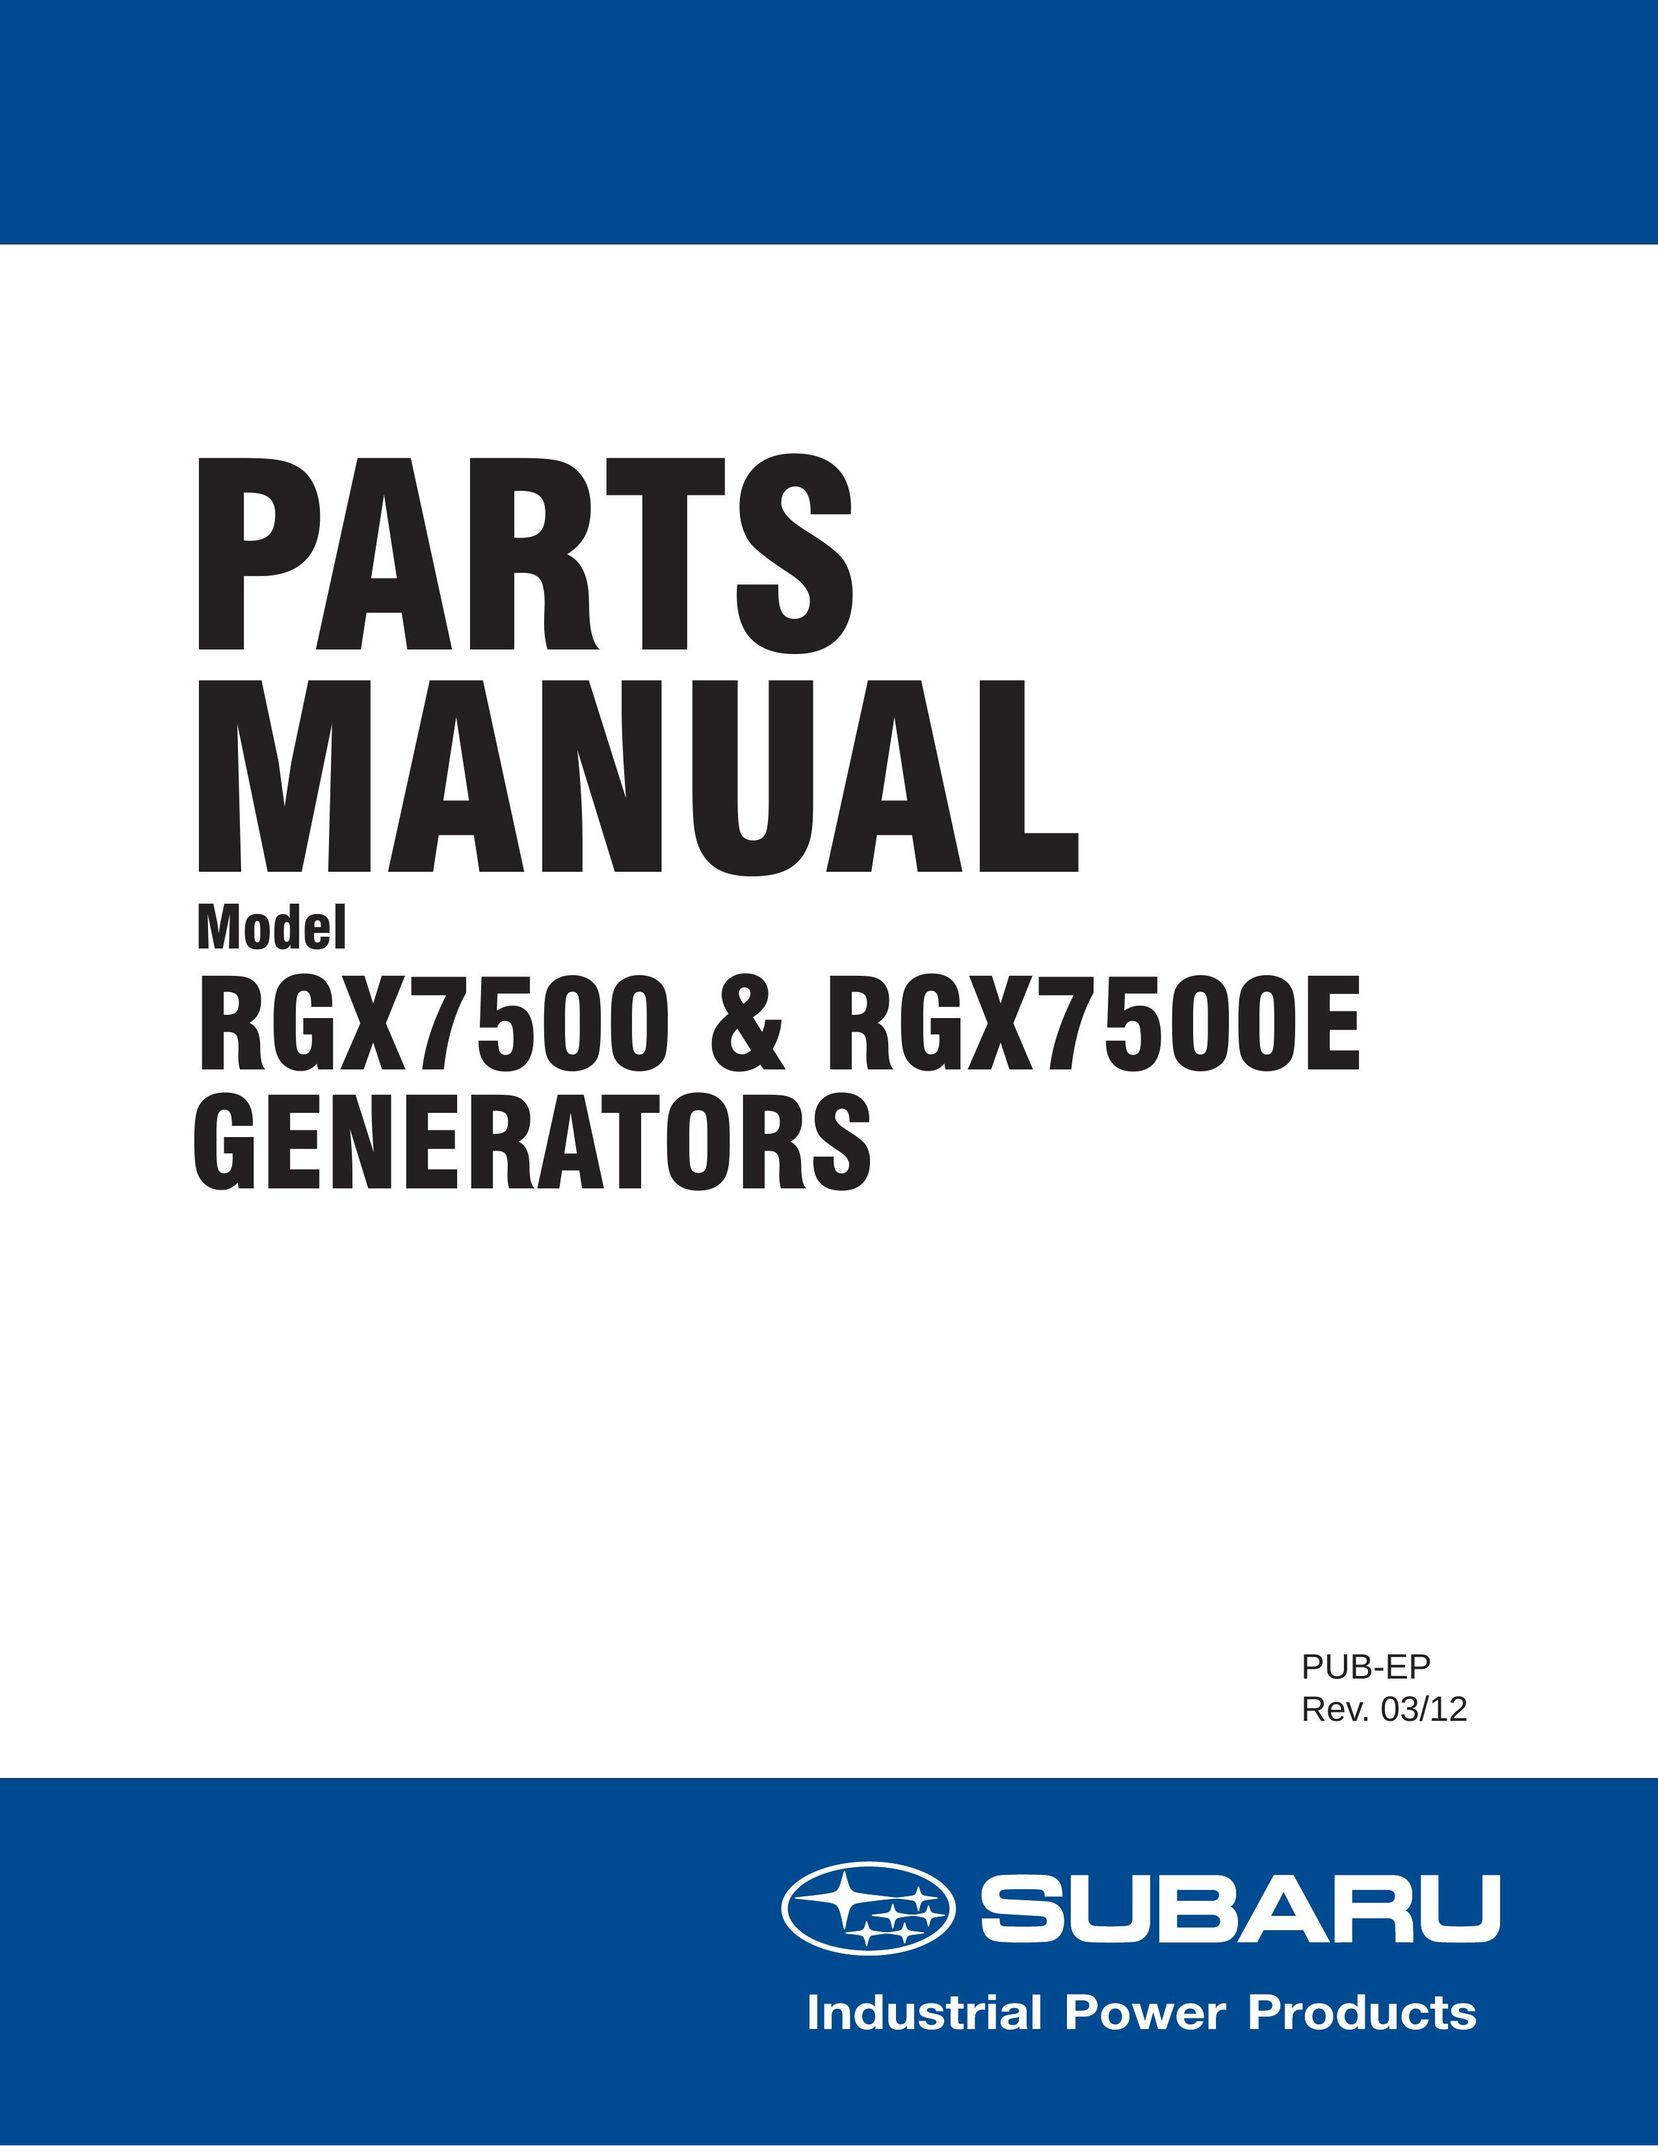 Subaru RGX7500E Welding System User Manual